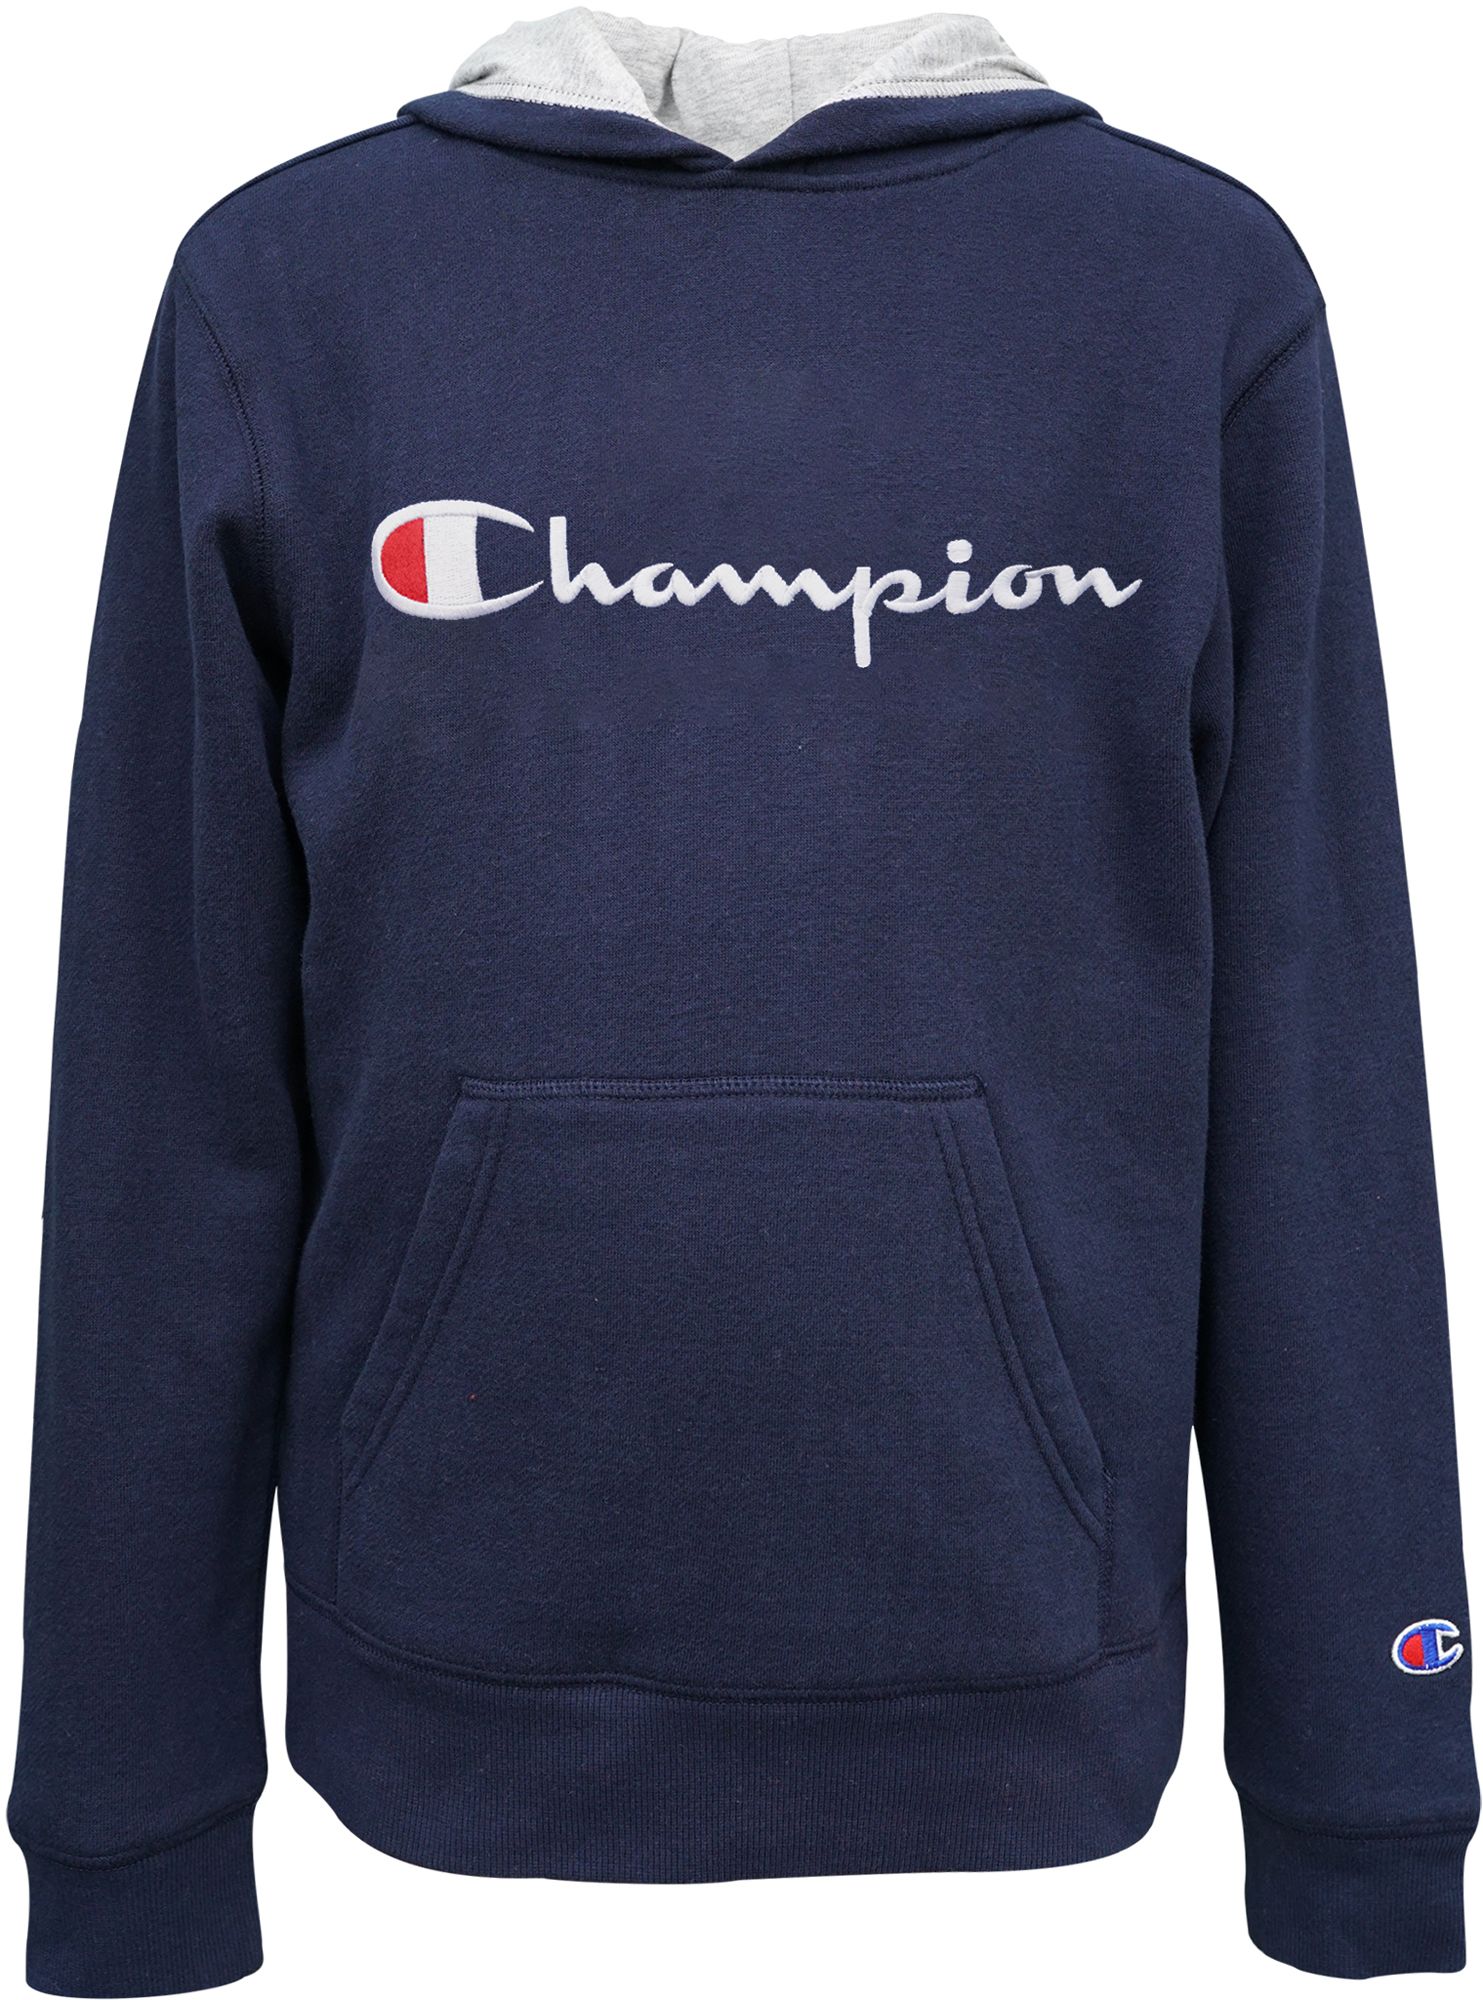 champion hoodie navy blue